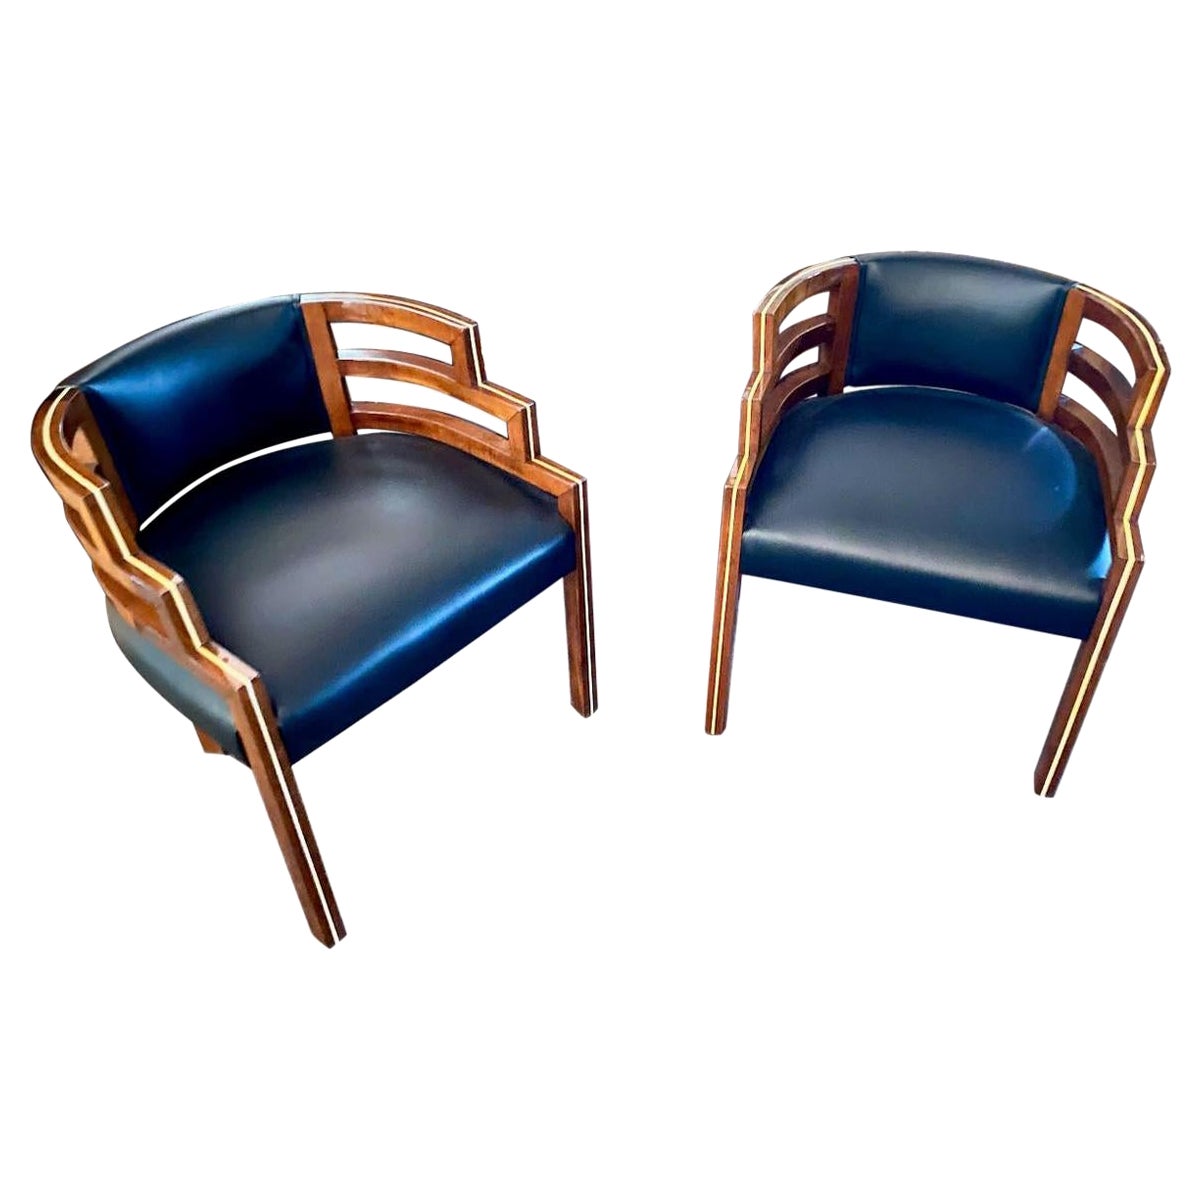 KEM Weber Style Art Deco Side Chairs